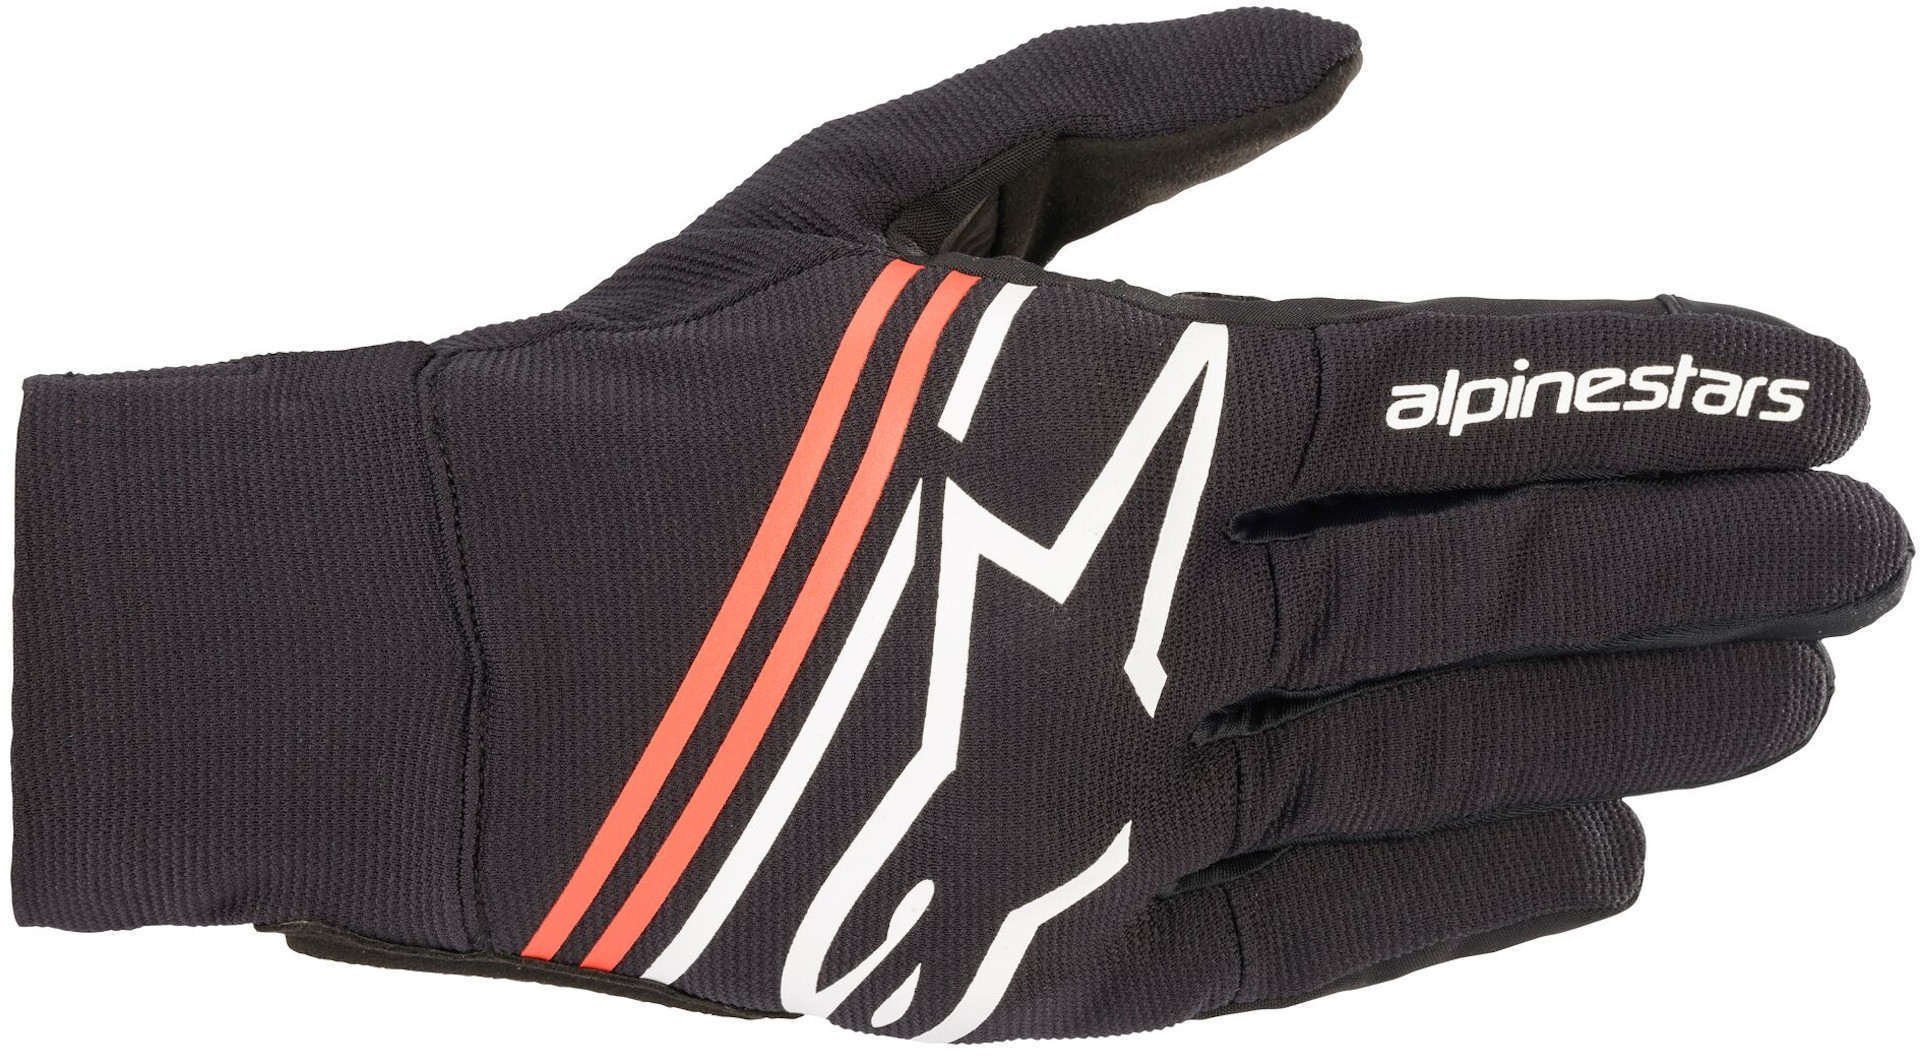 Alpinestars Motorradhandschuhe Reef Motorrad Handschuhe Black/White/Red